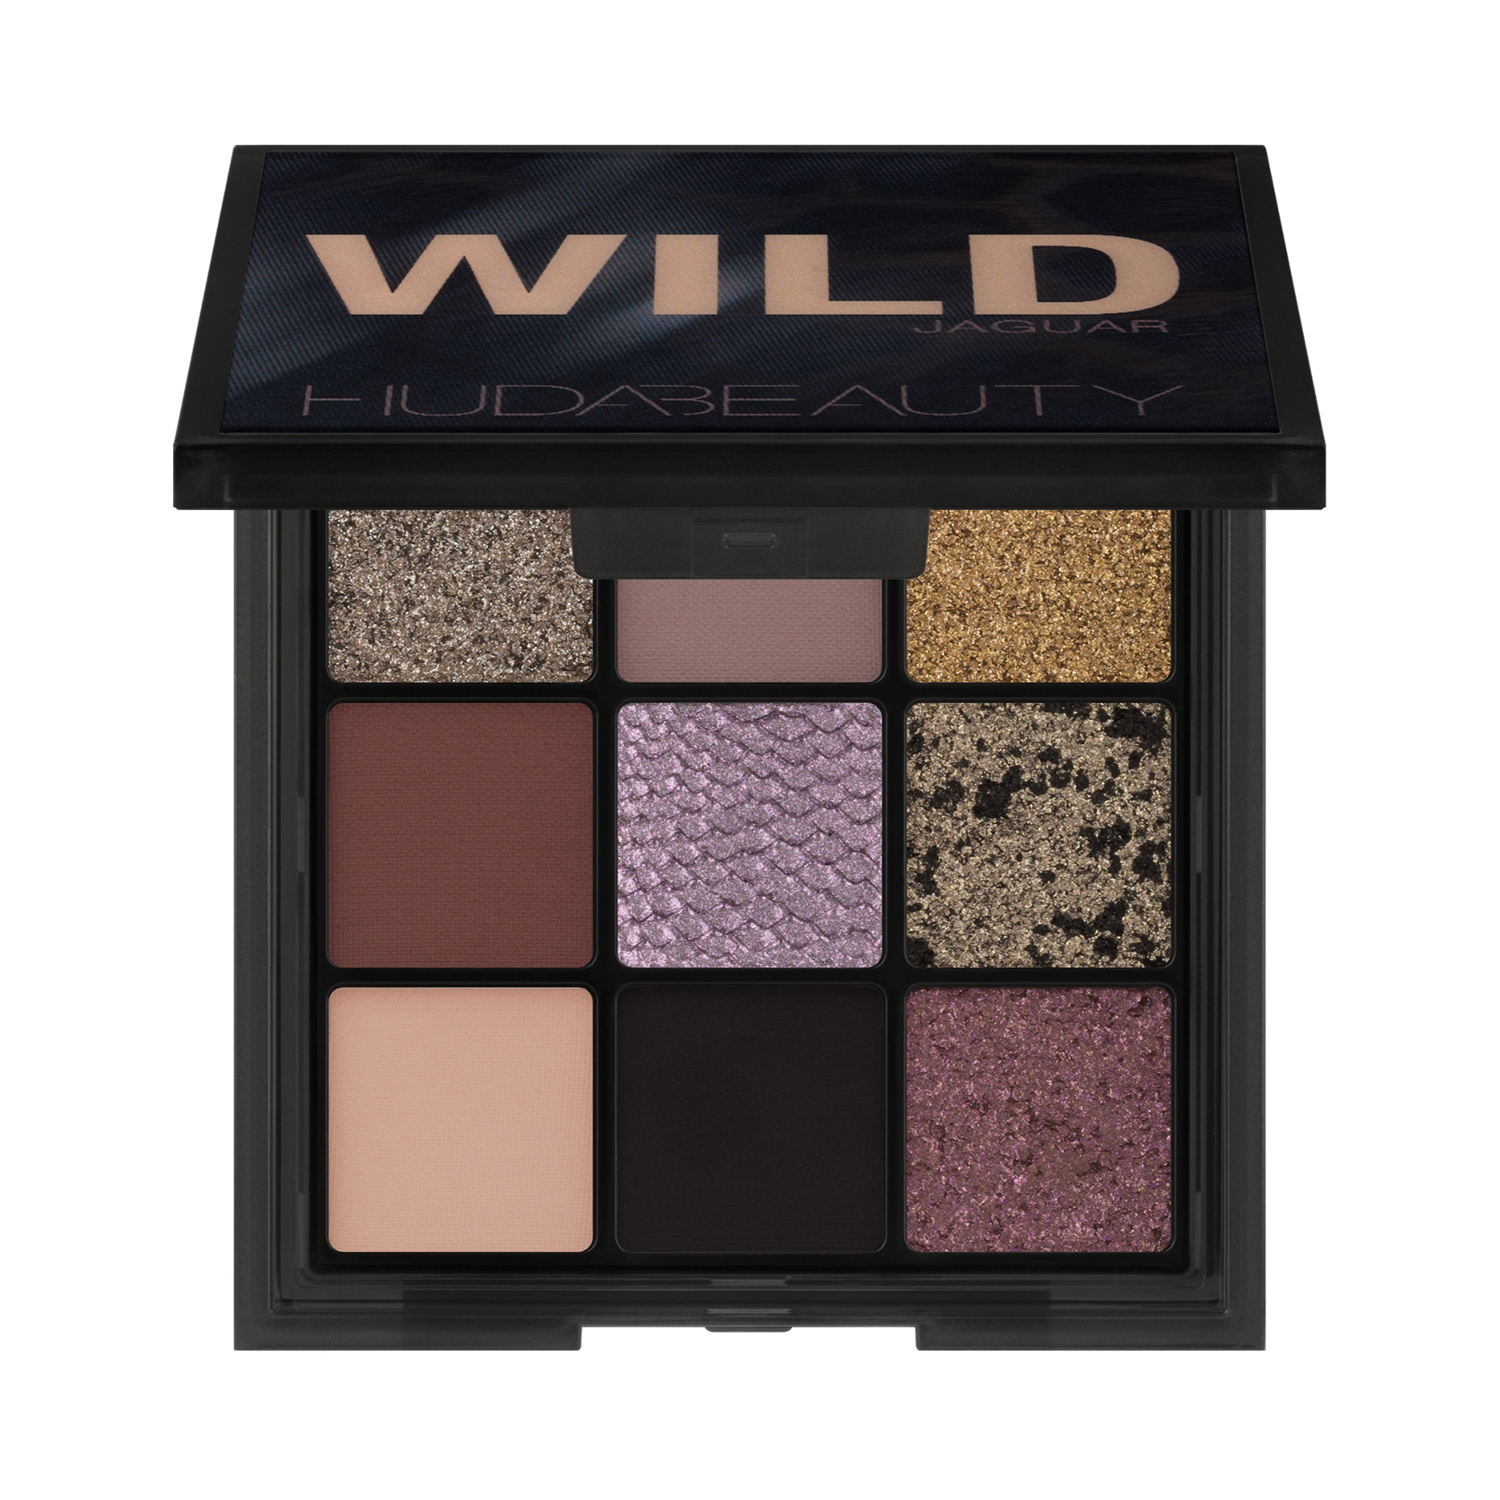 Huda Beauty | Huda Beauty Wild Obsessions Eyeshadow Palette - Jaguar (7.5g)